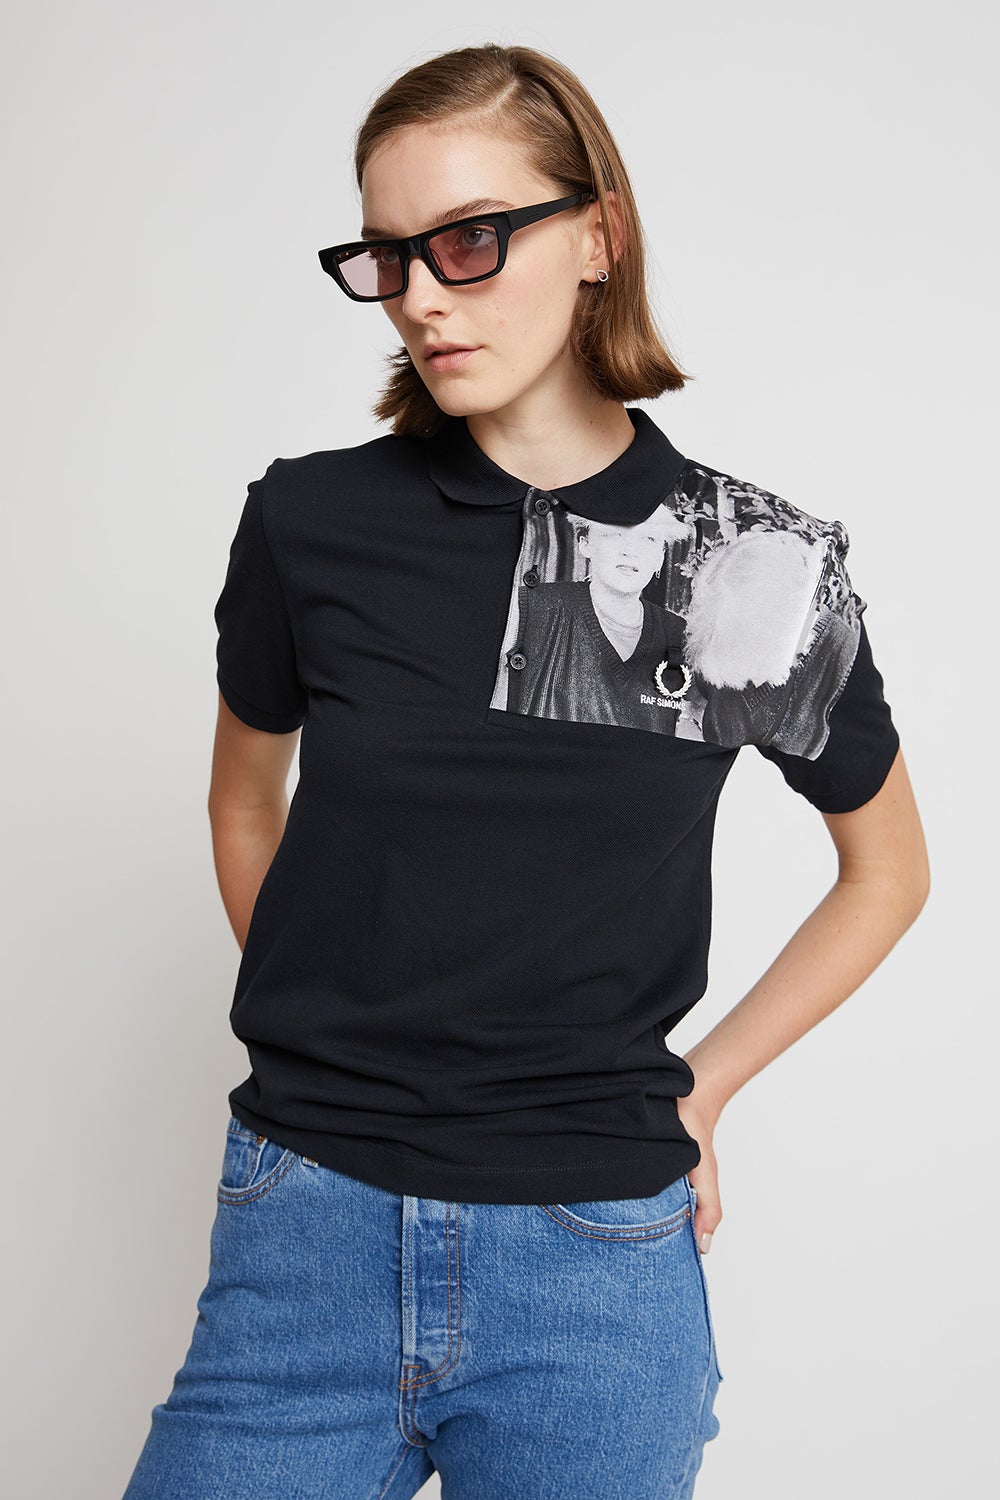 Fred Perry x Raf Simons Shoulder Print Piqué Shirt